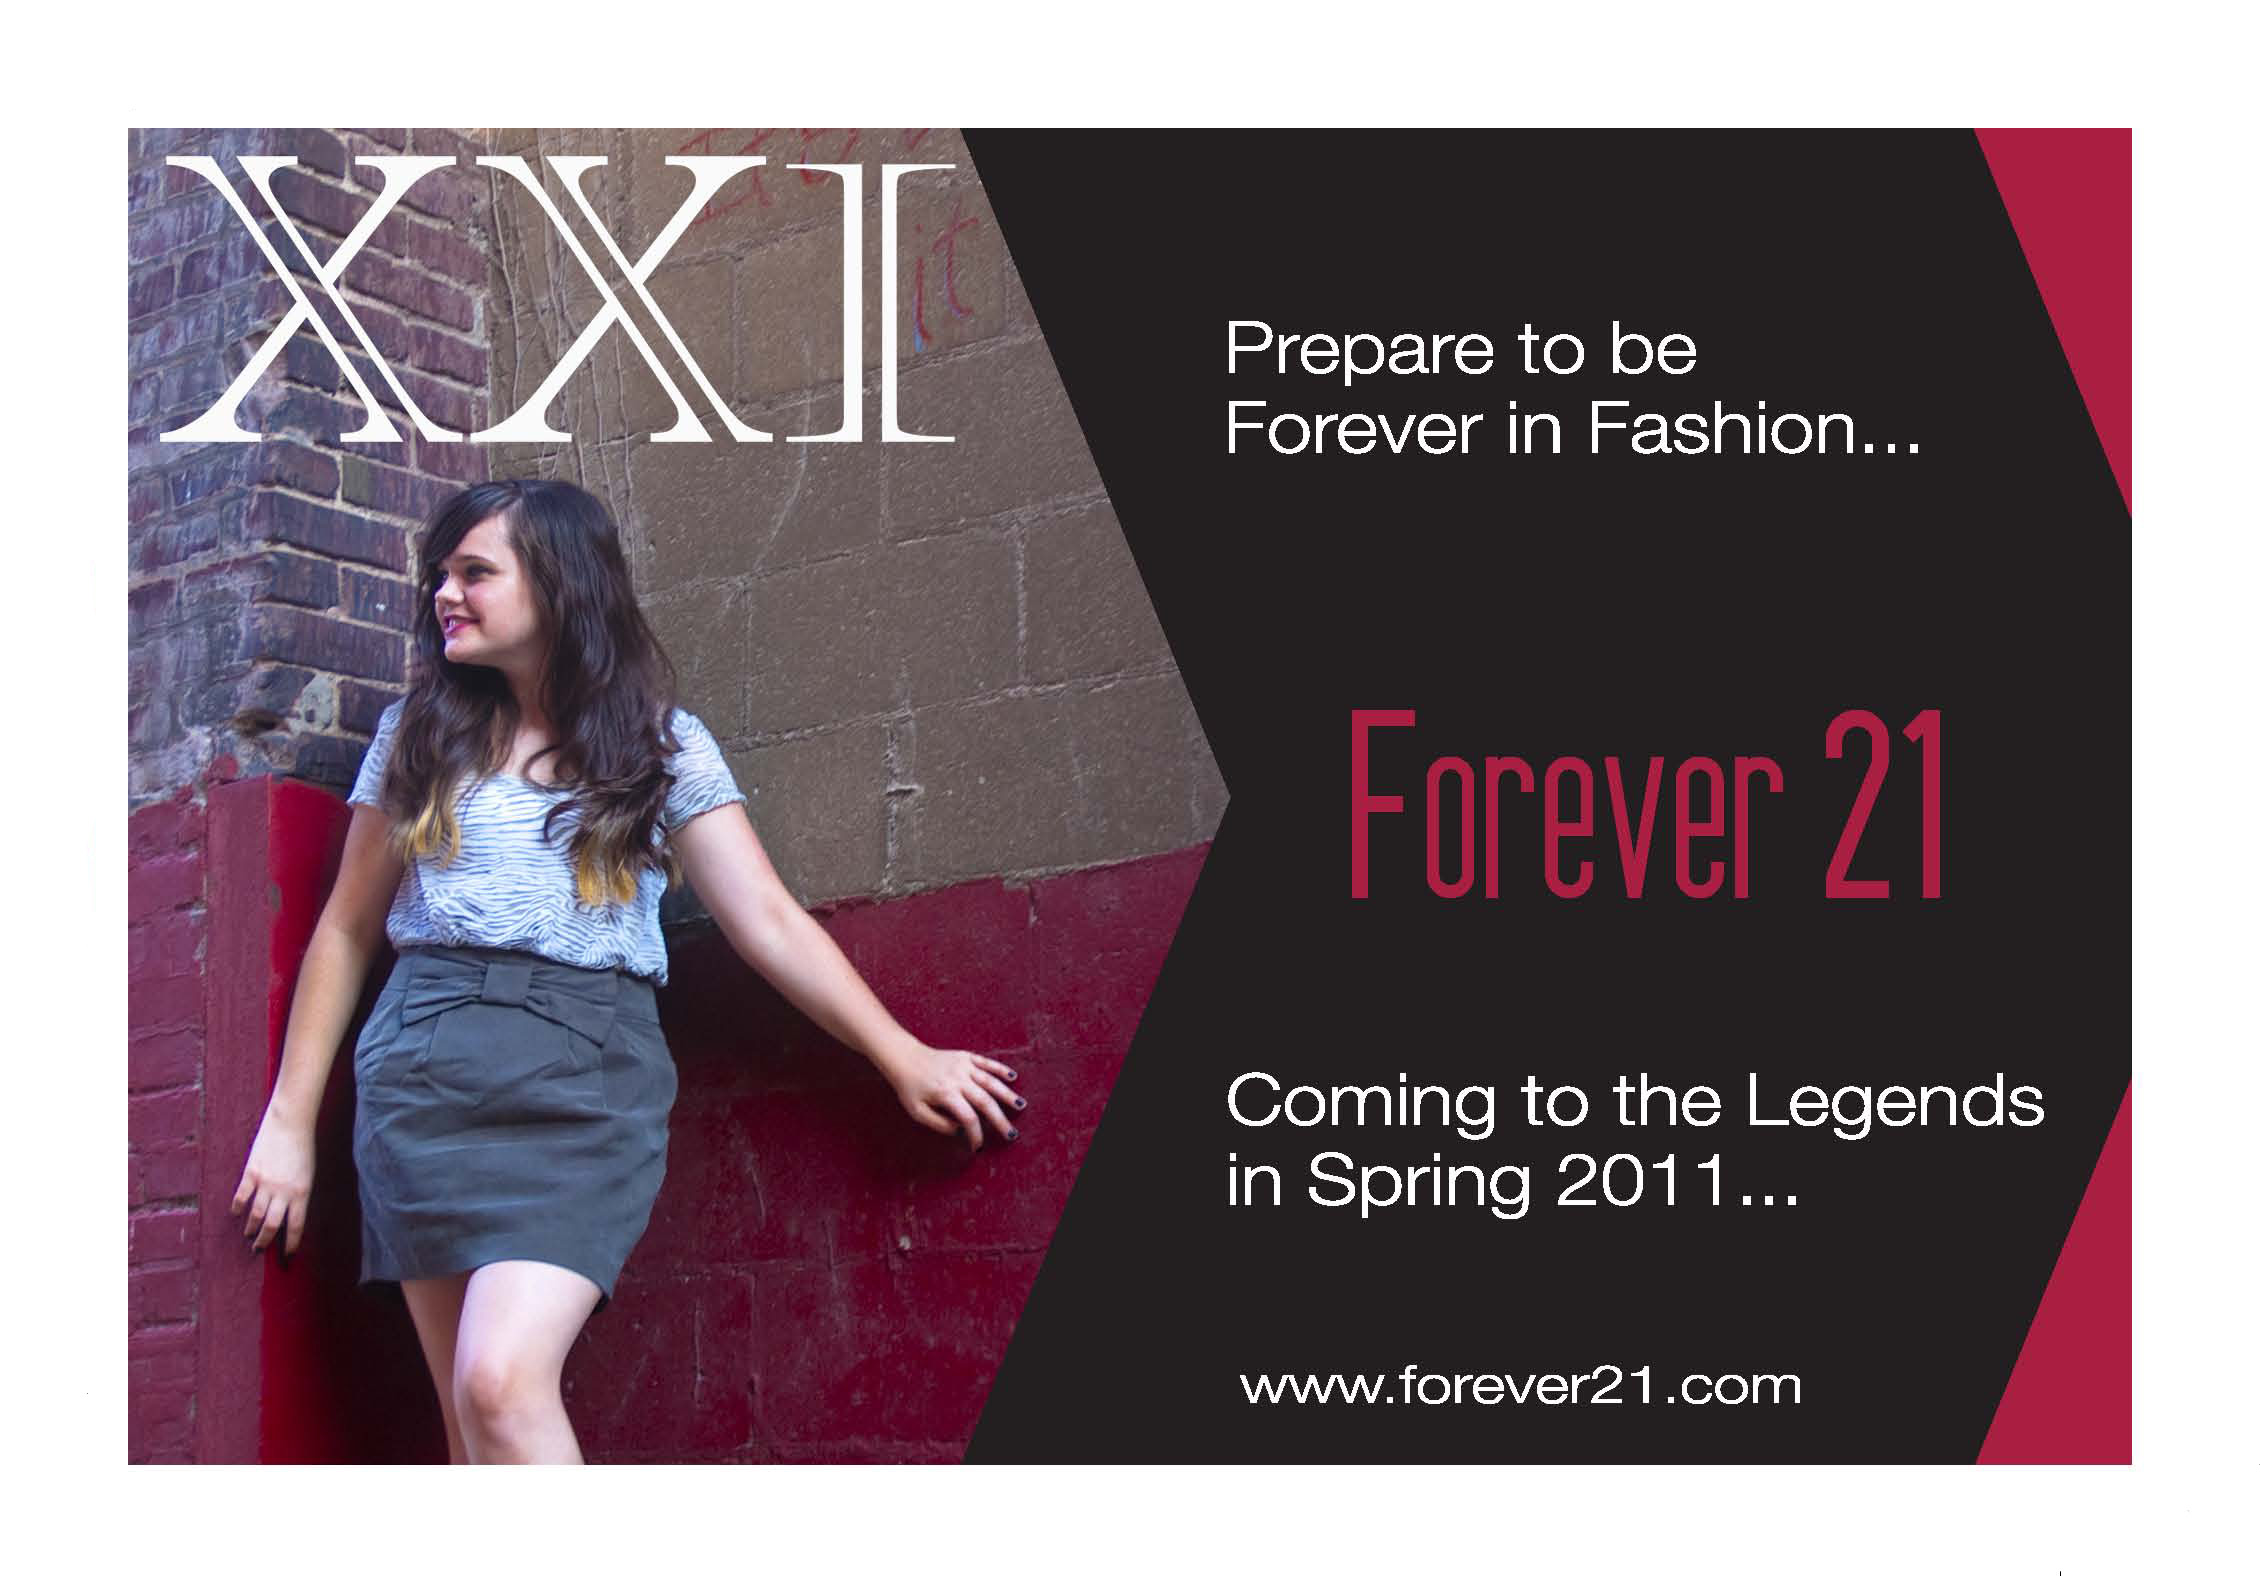 XXI Forever 21 - Magazine Advertisement